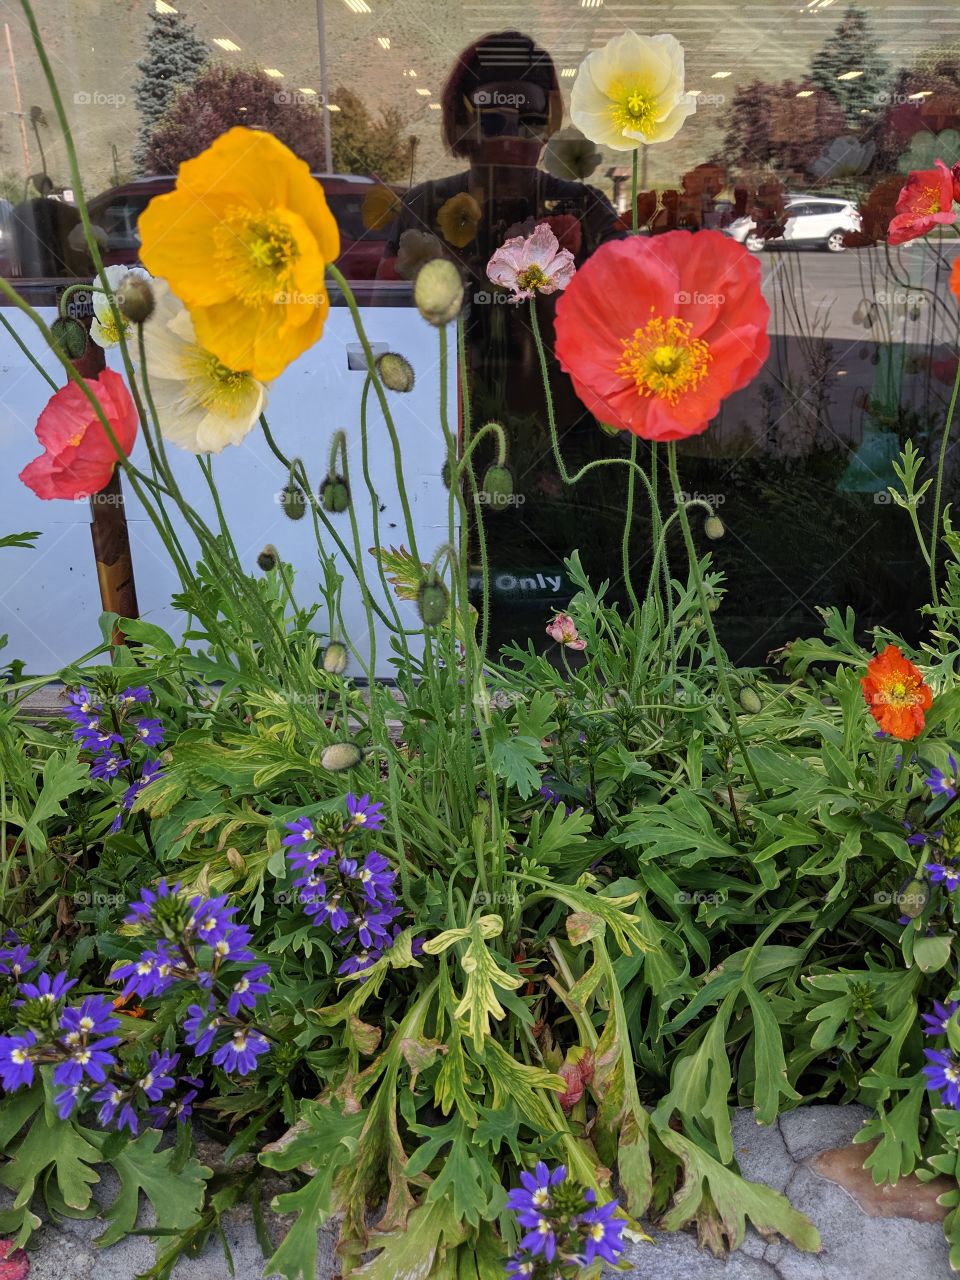 Flowers in Hailey, Idaho